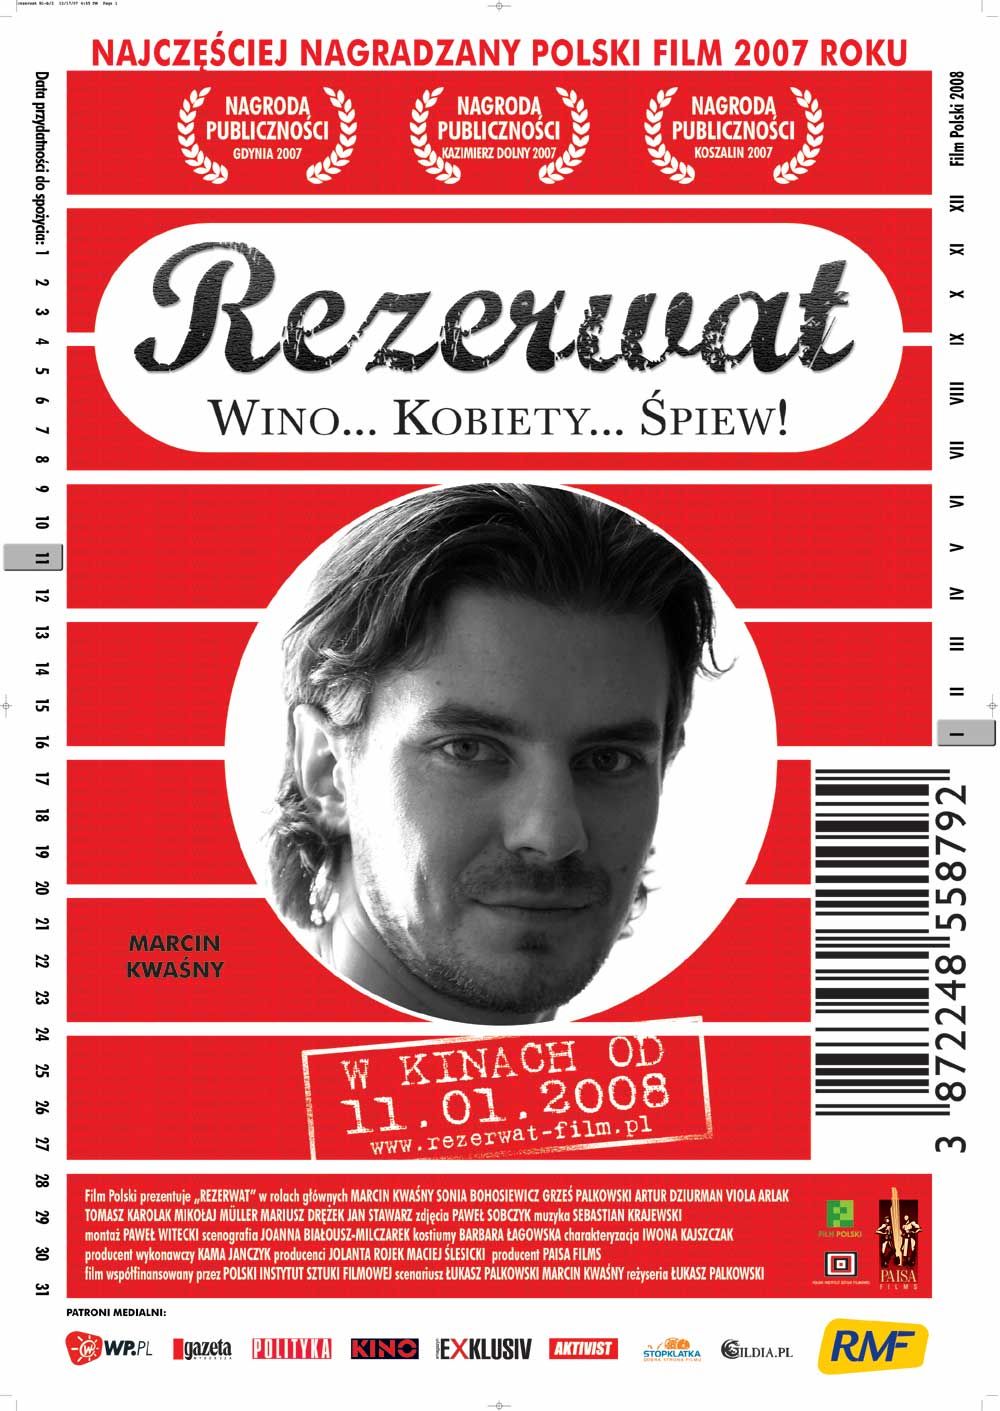 Extra Large Movie Poster Image for Rezerwat (#1 of 2)